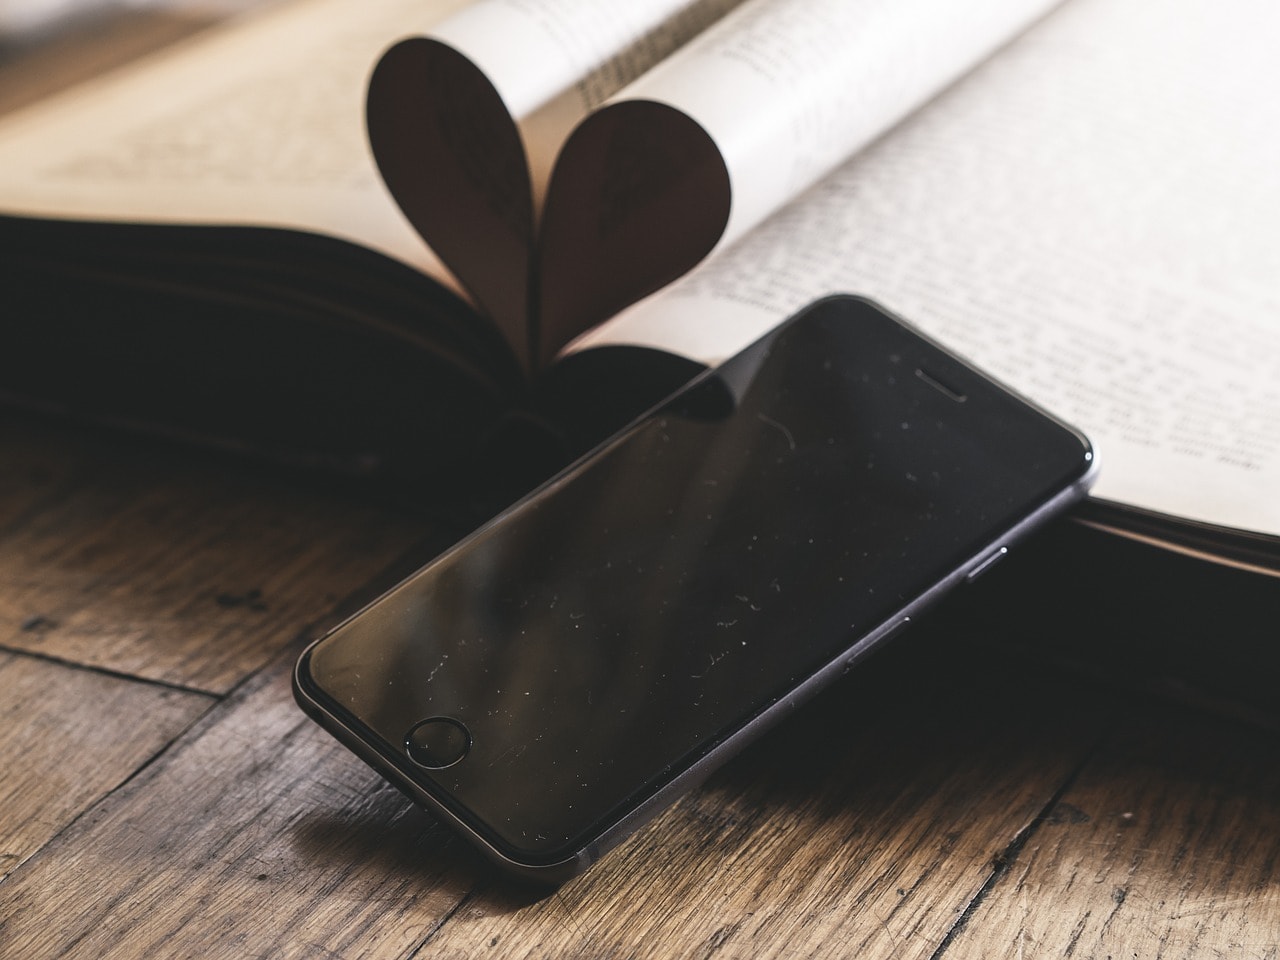 Heart, phone, romance, senior scams